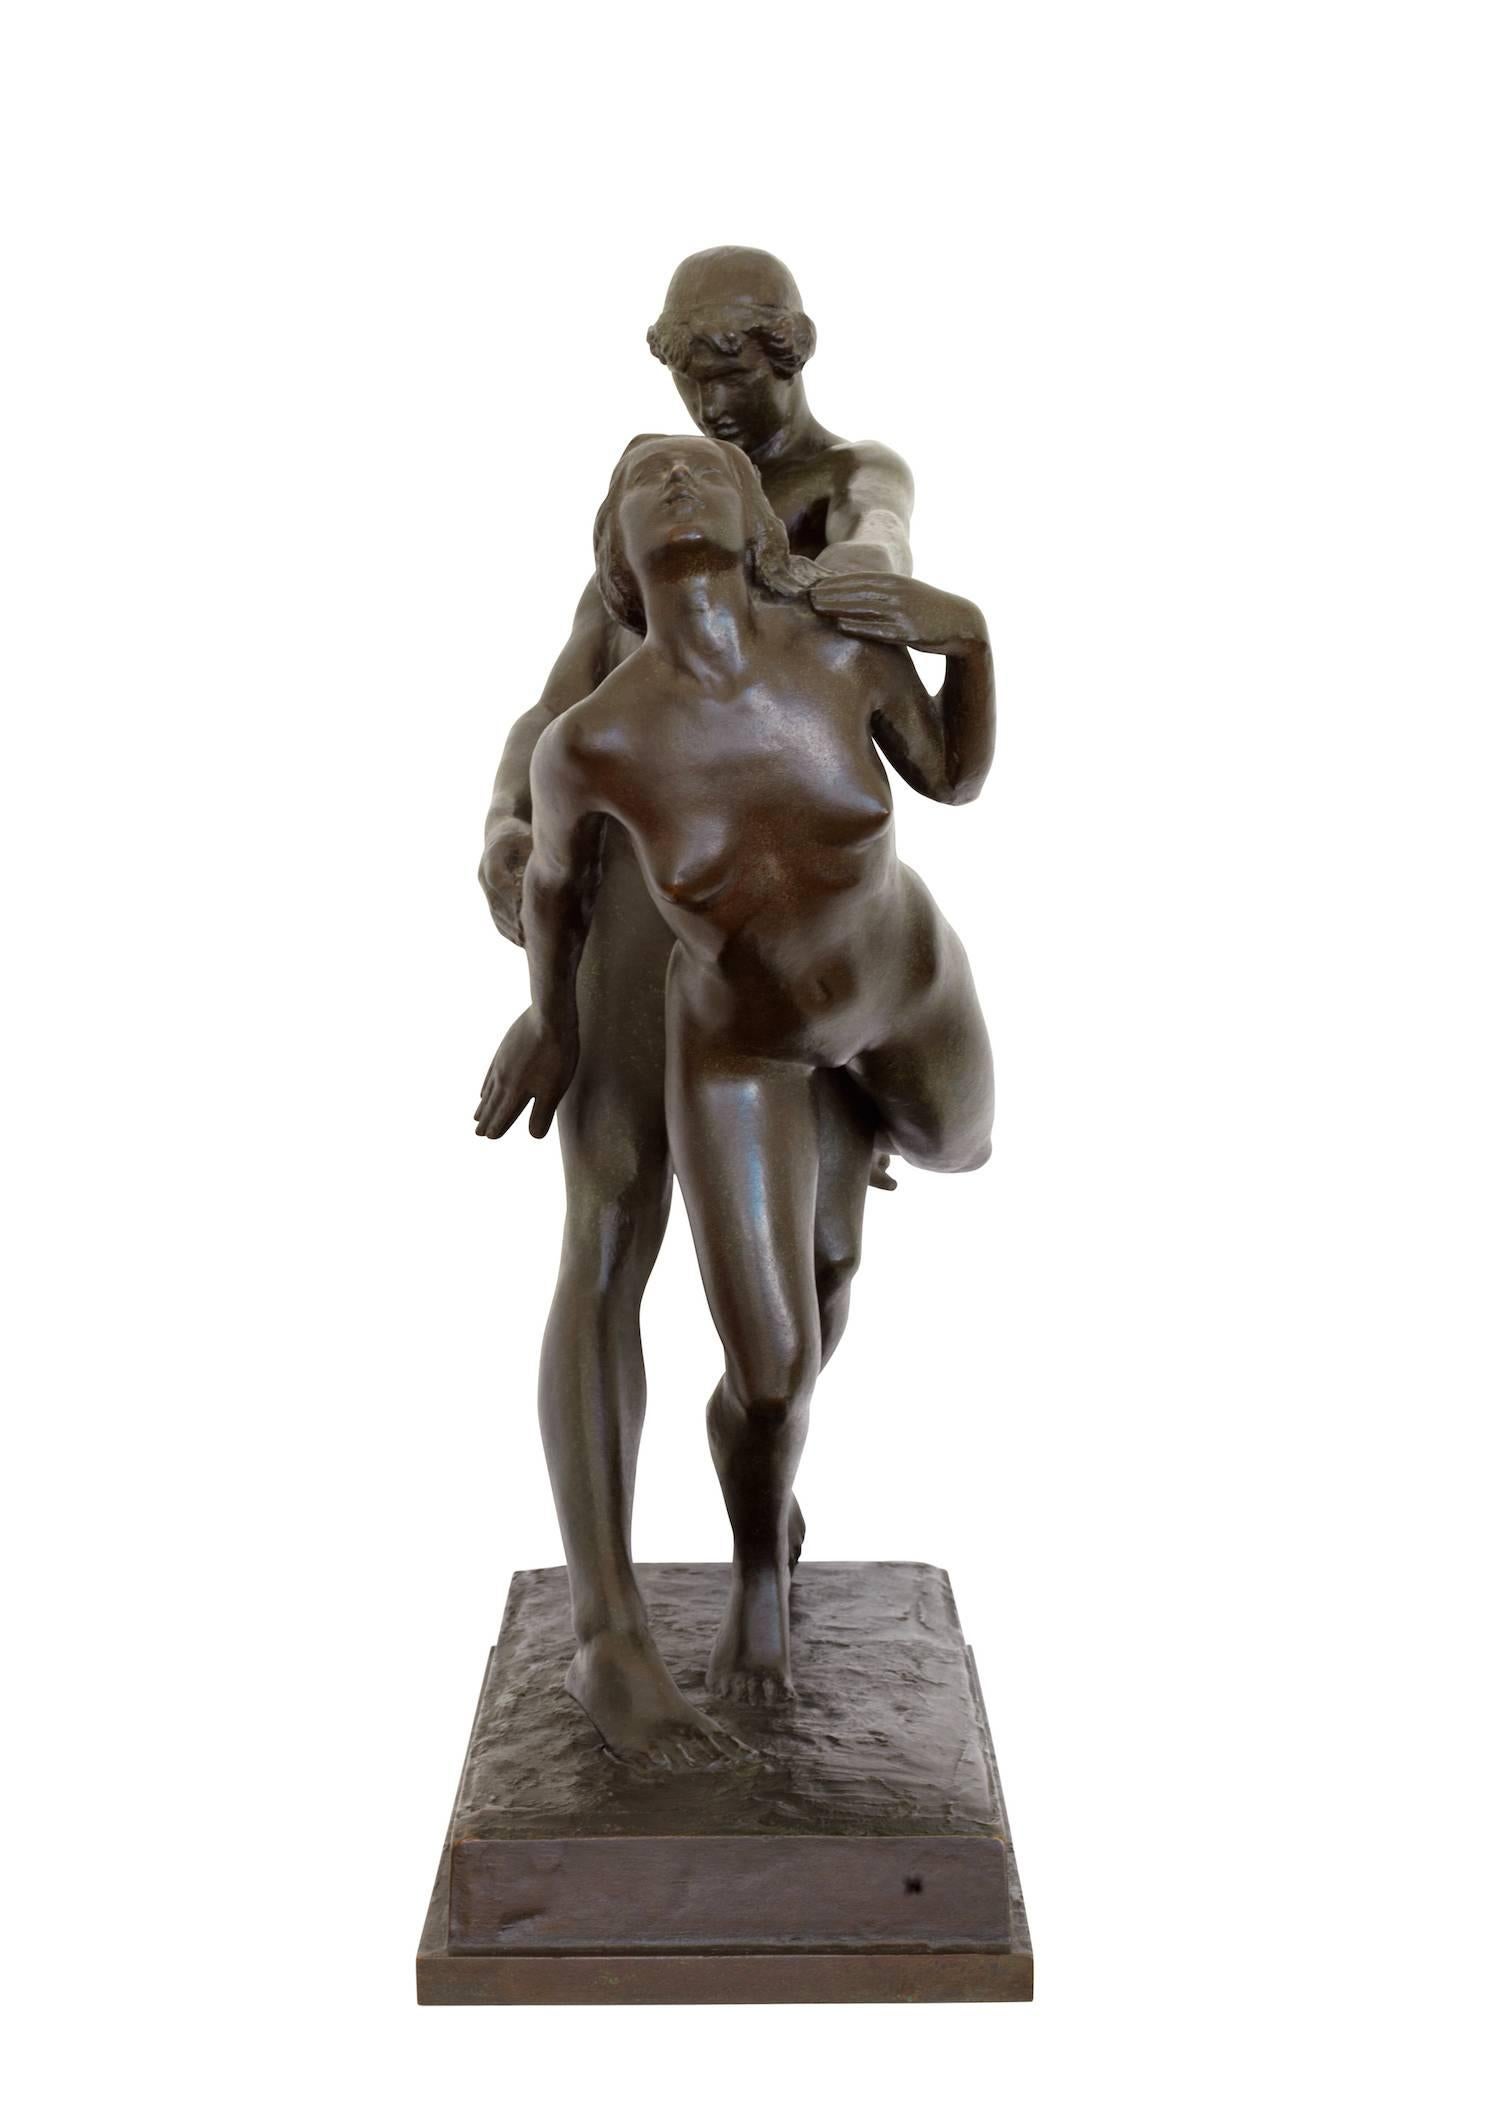 Patinated bronze sculpture depicting Adam and eve.
Signed A.J. Bundgaard 1917-1932.